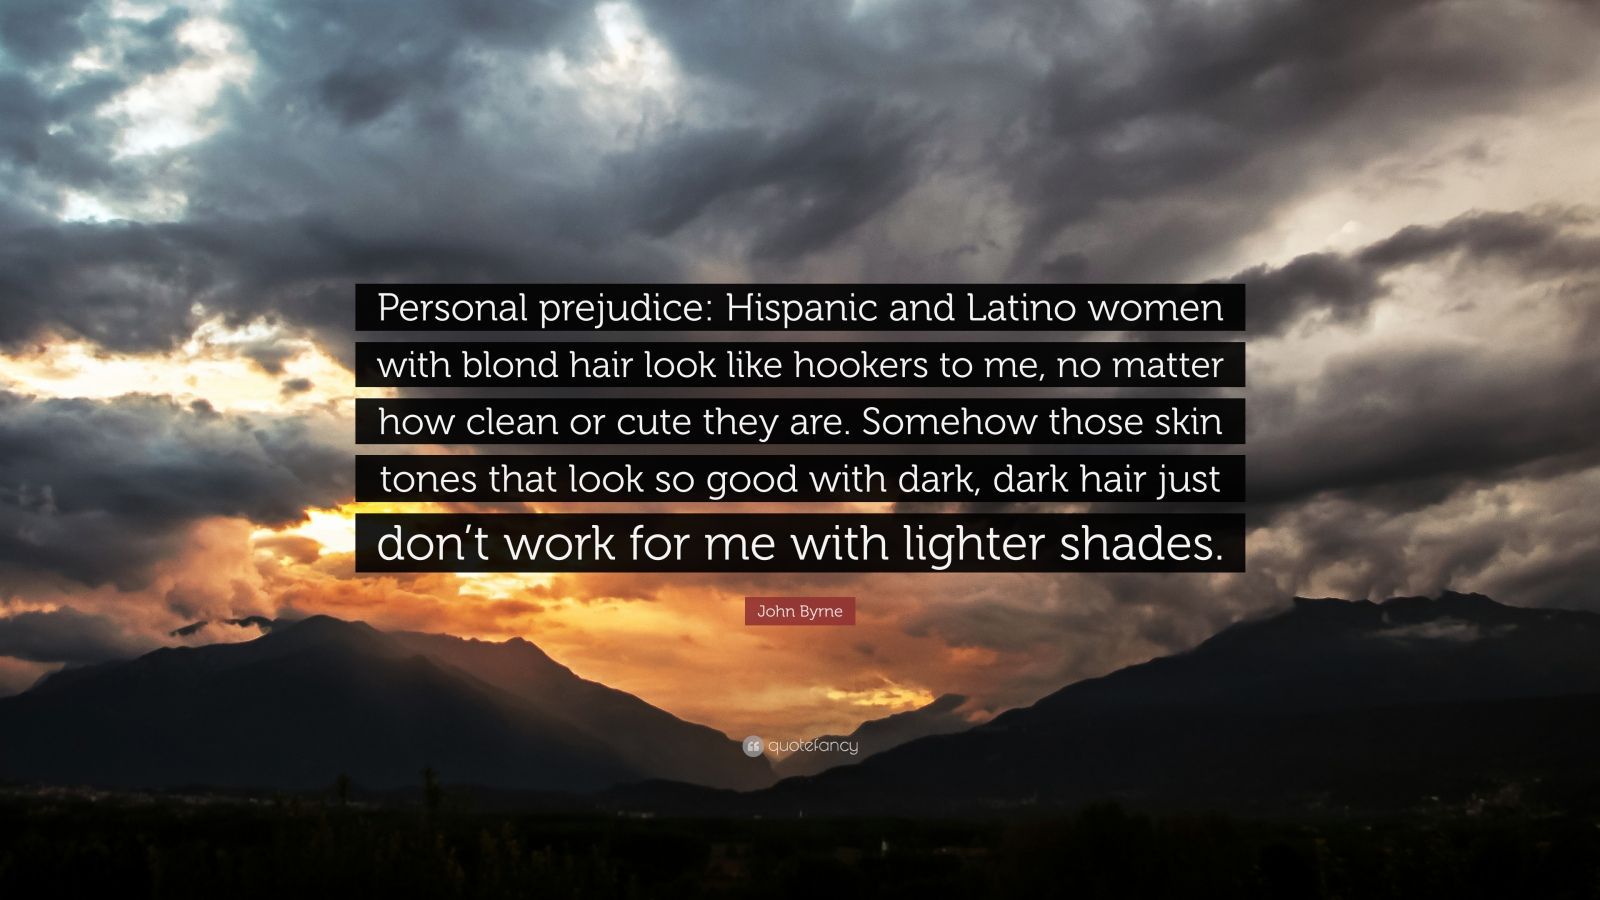 John Byrne Quote: “Personal prejudice: Hispanic and Latino women